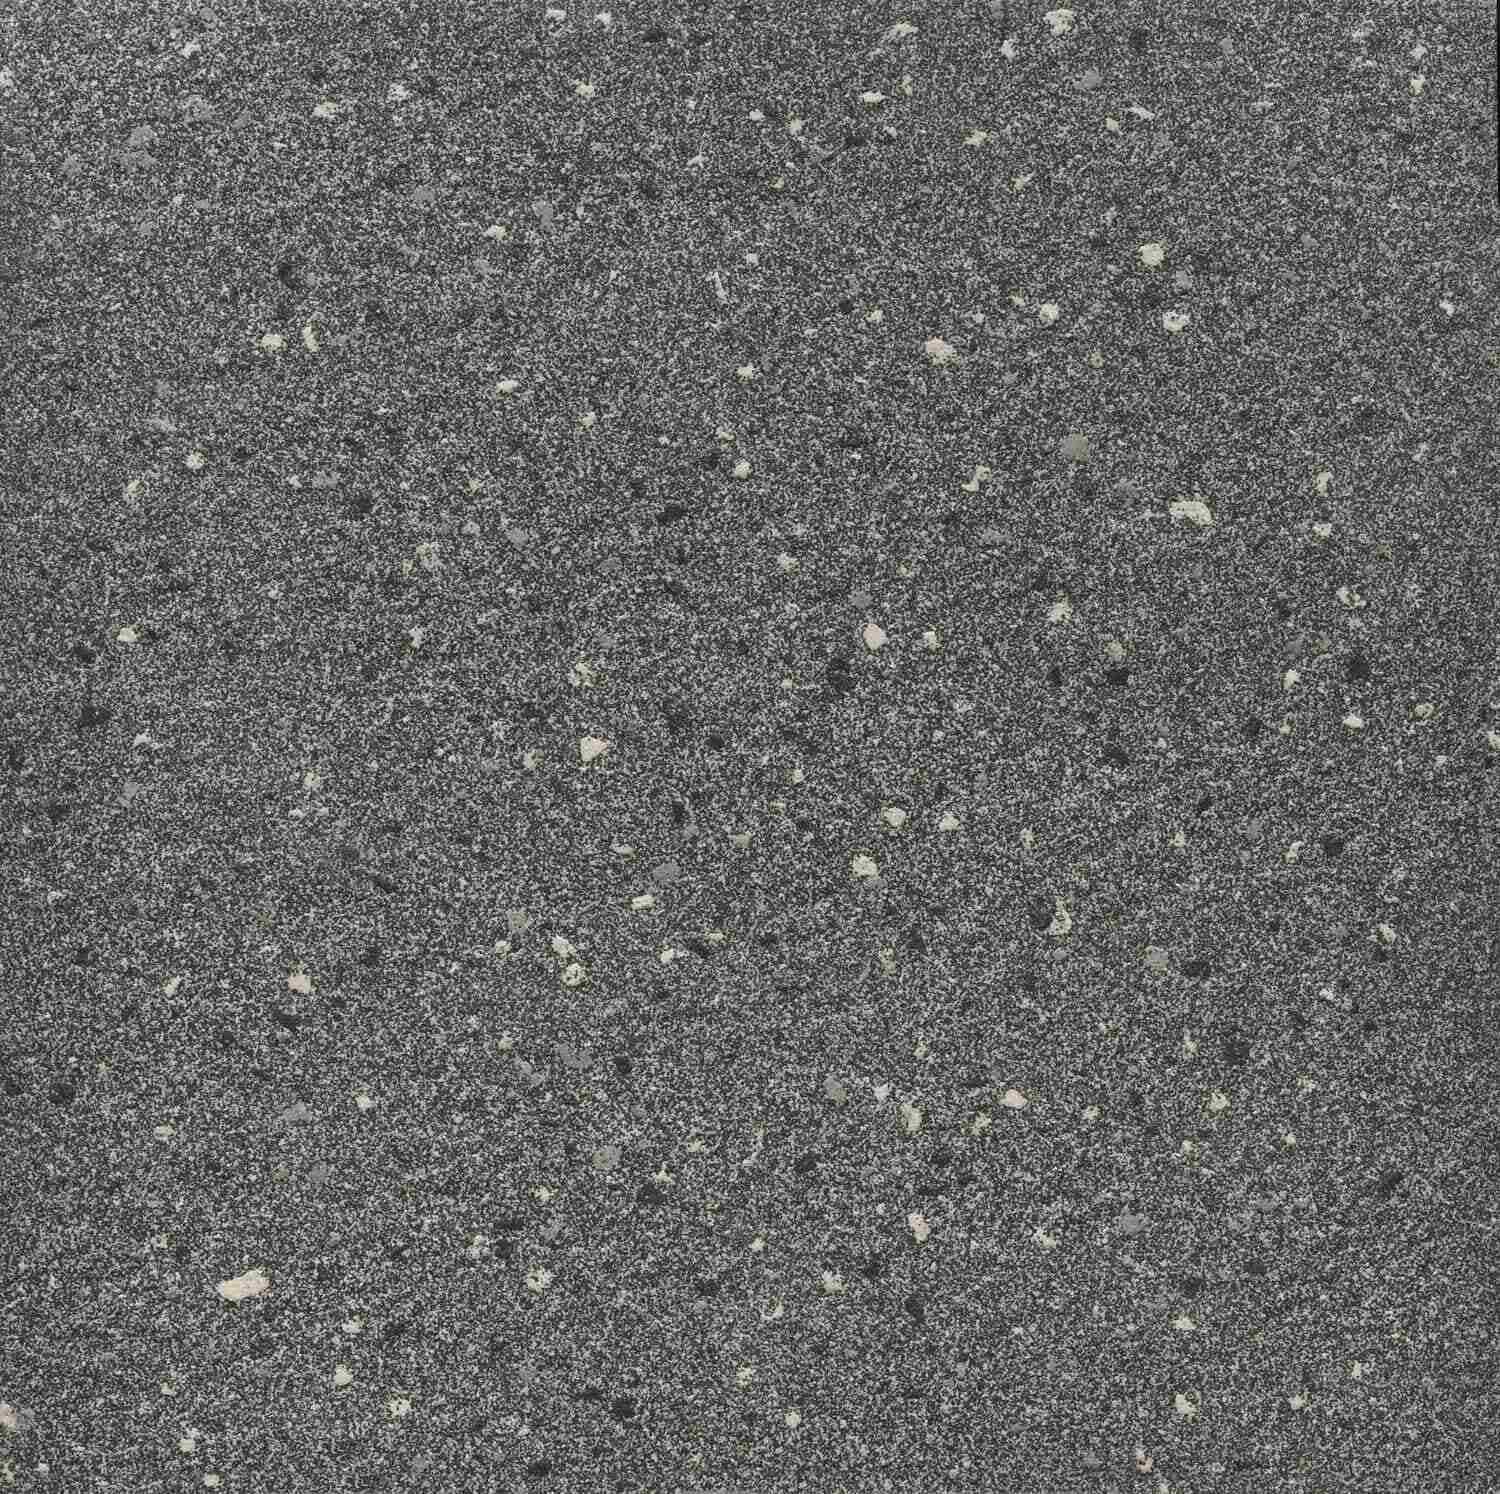 Dorset Woolliscroft Pebbled Aggregate Dark Grey Slip Resistant Quarry Tile 300x300mm